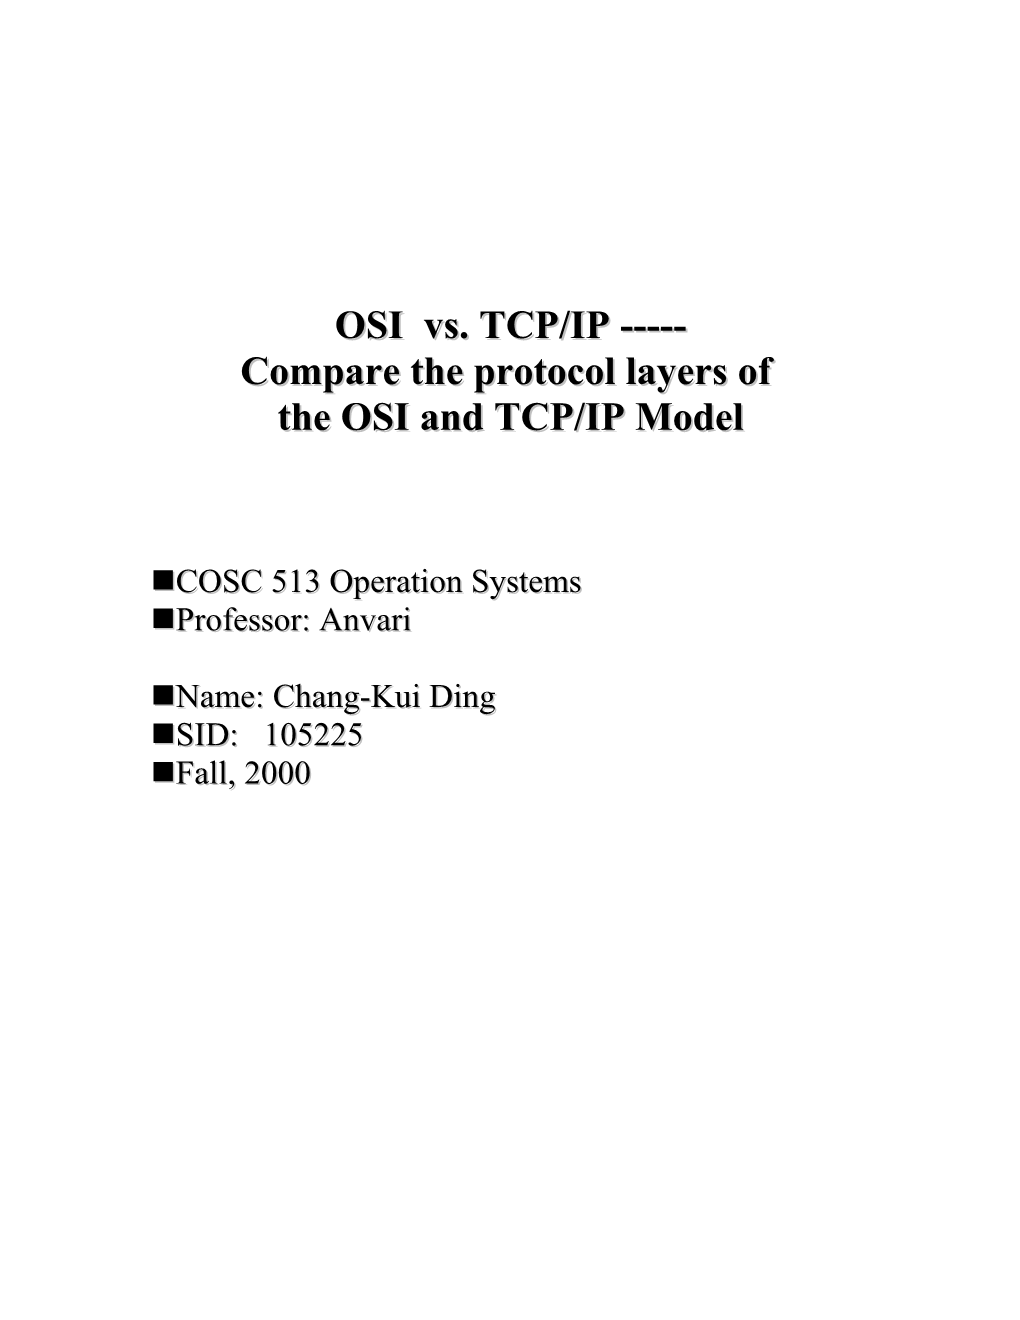 OSI Vs. TCP/IP Compare the Protocol Layers Of